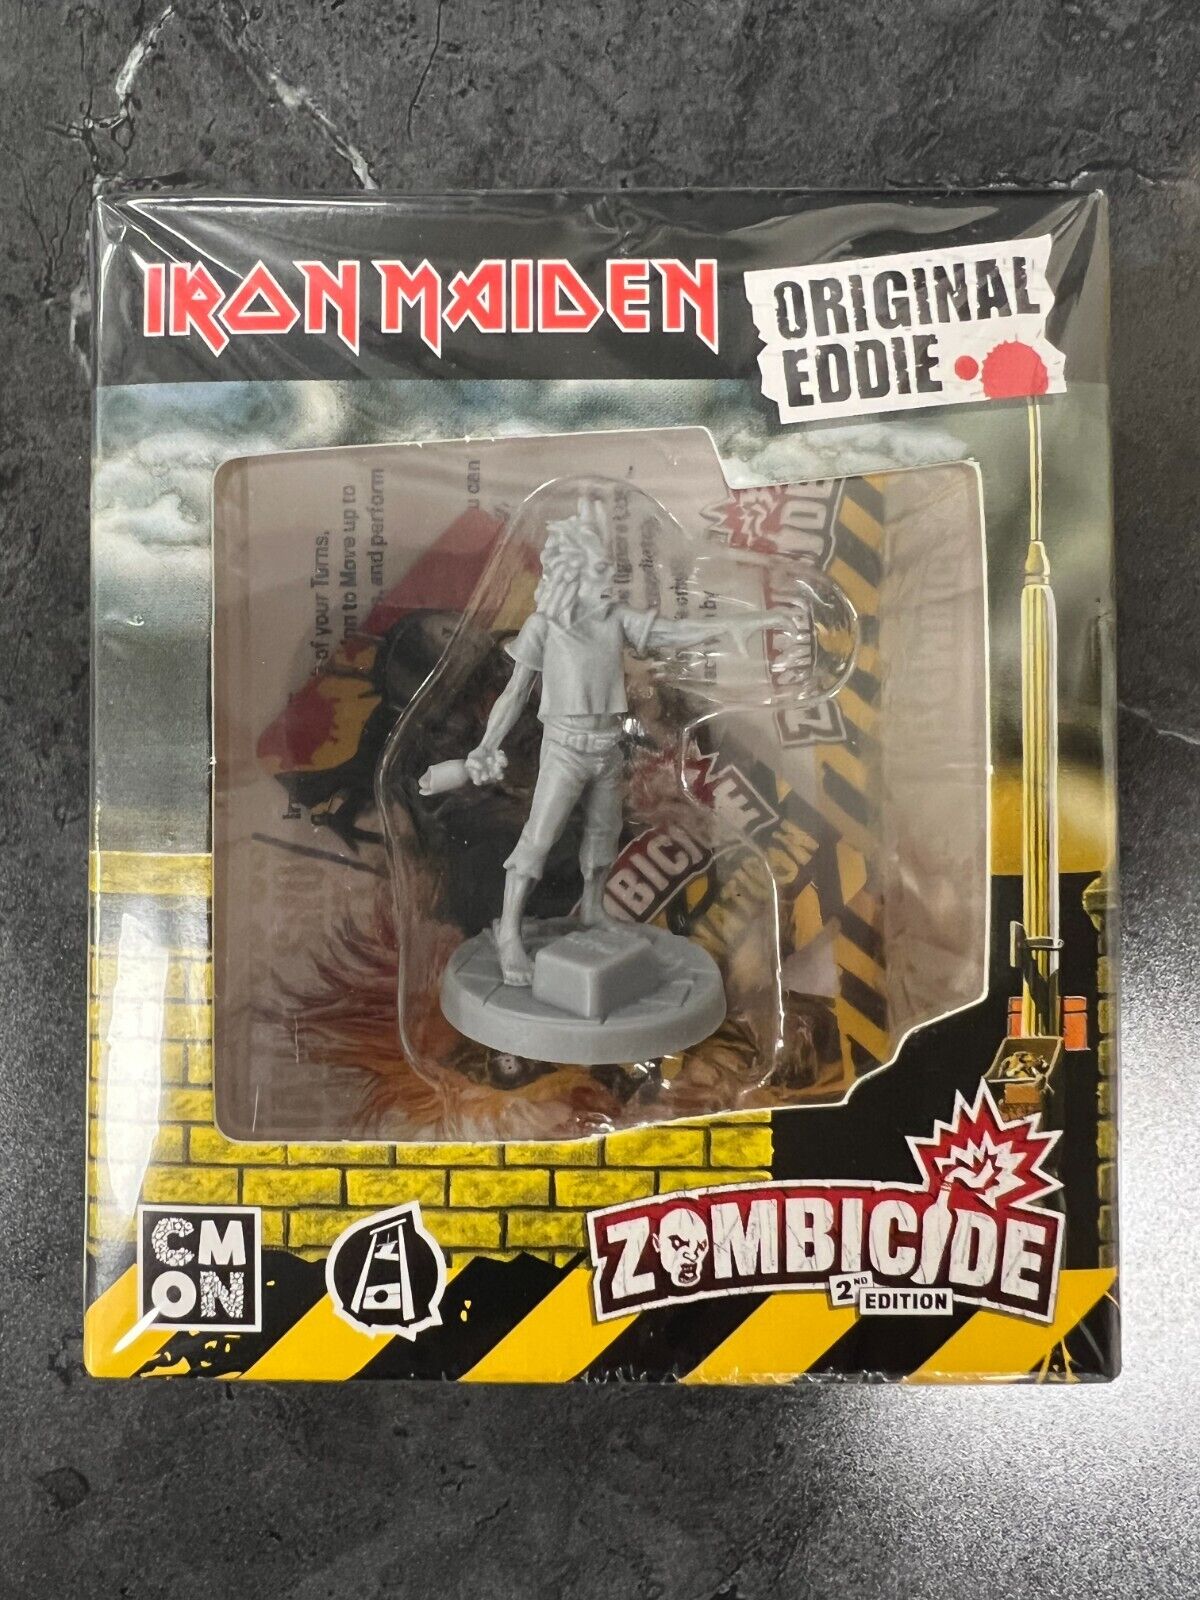 CMON Zombicide Iron Maiden Promo - ORIGINAL EDDIE - NEW SEALED IN HAND